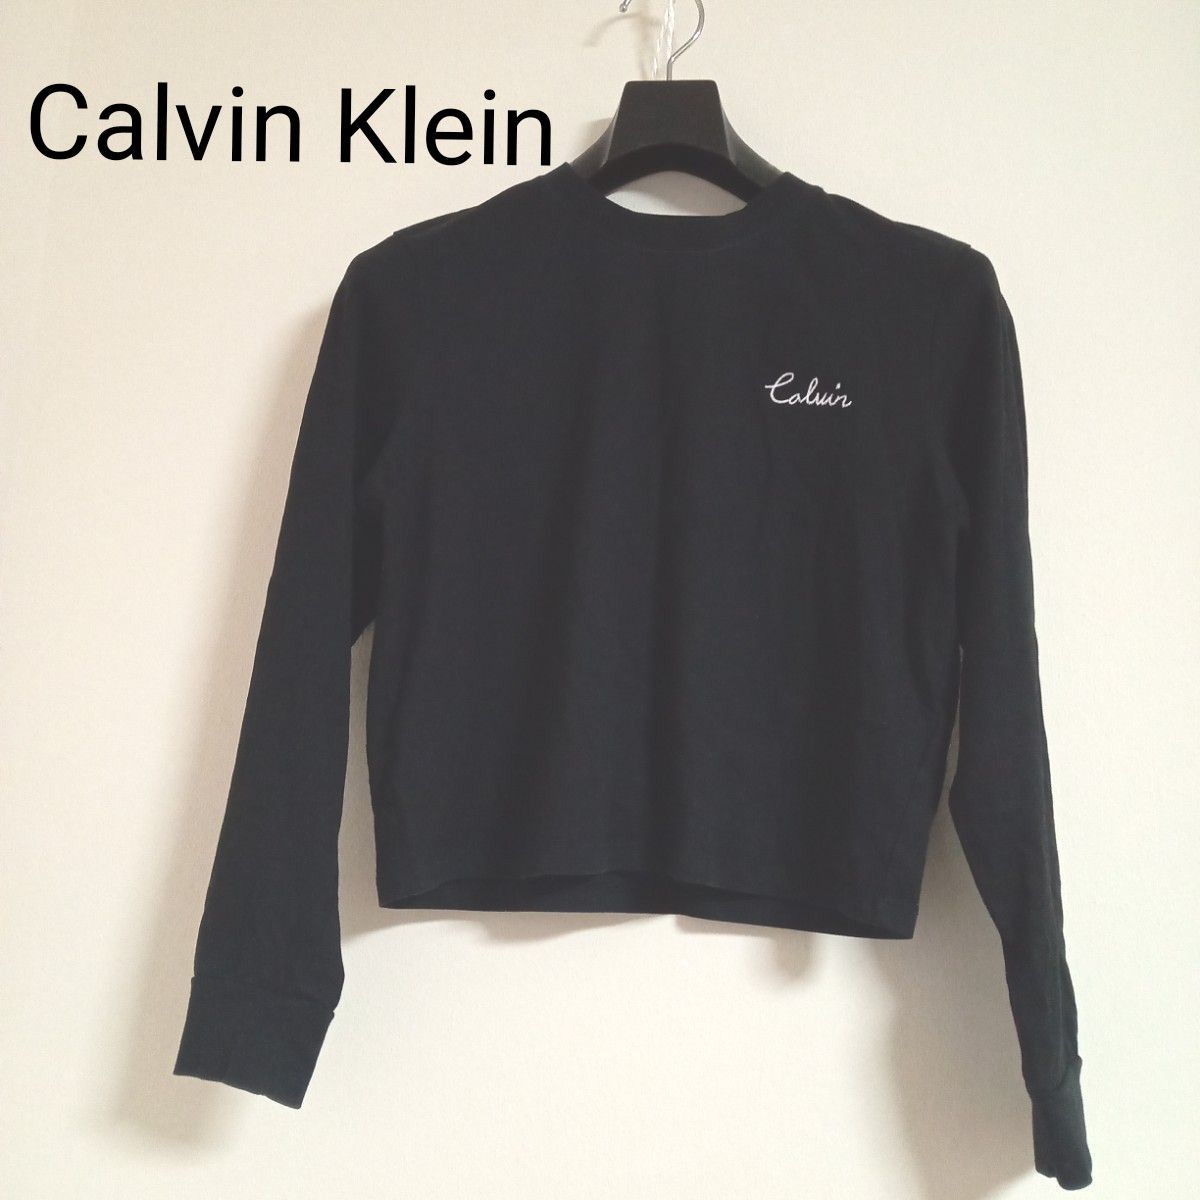 Calvin Klein Jeans　黒トップススポーツウェア肌見せファッション 長袖Tシャツ